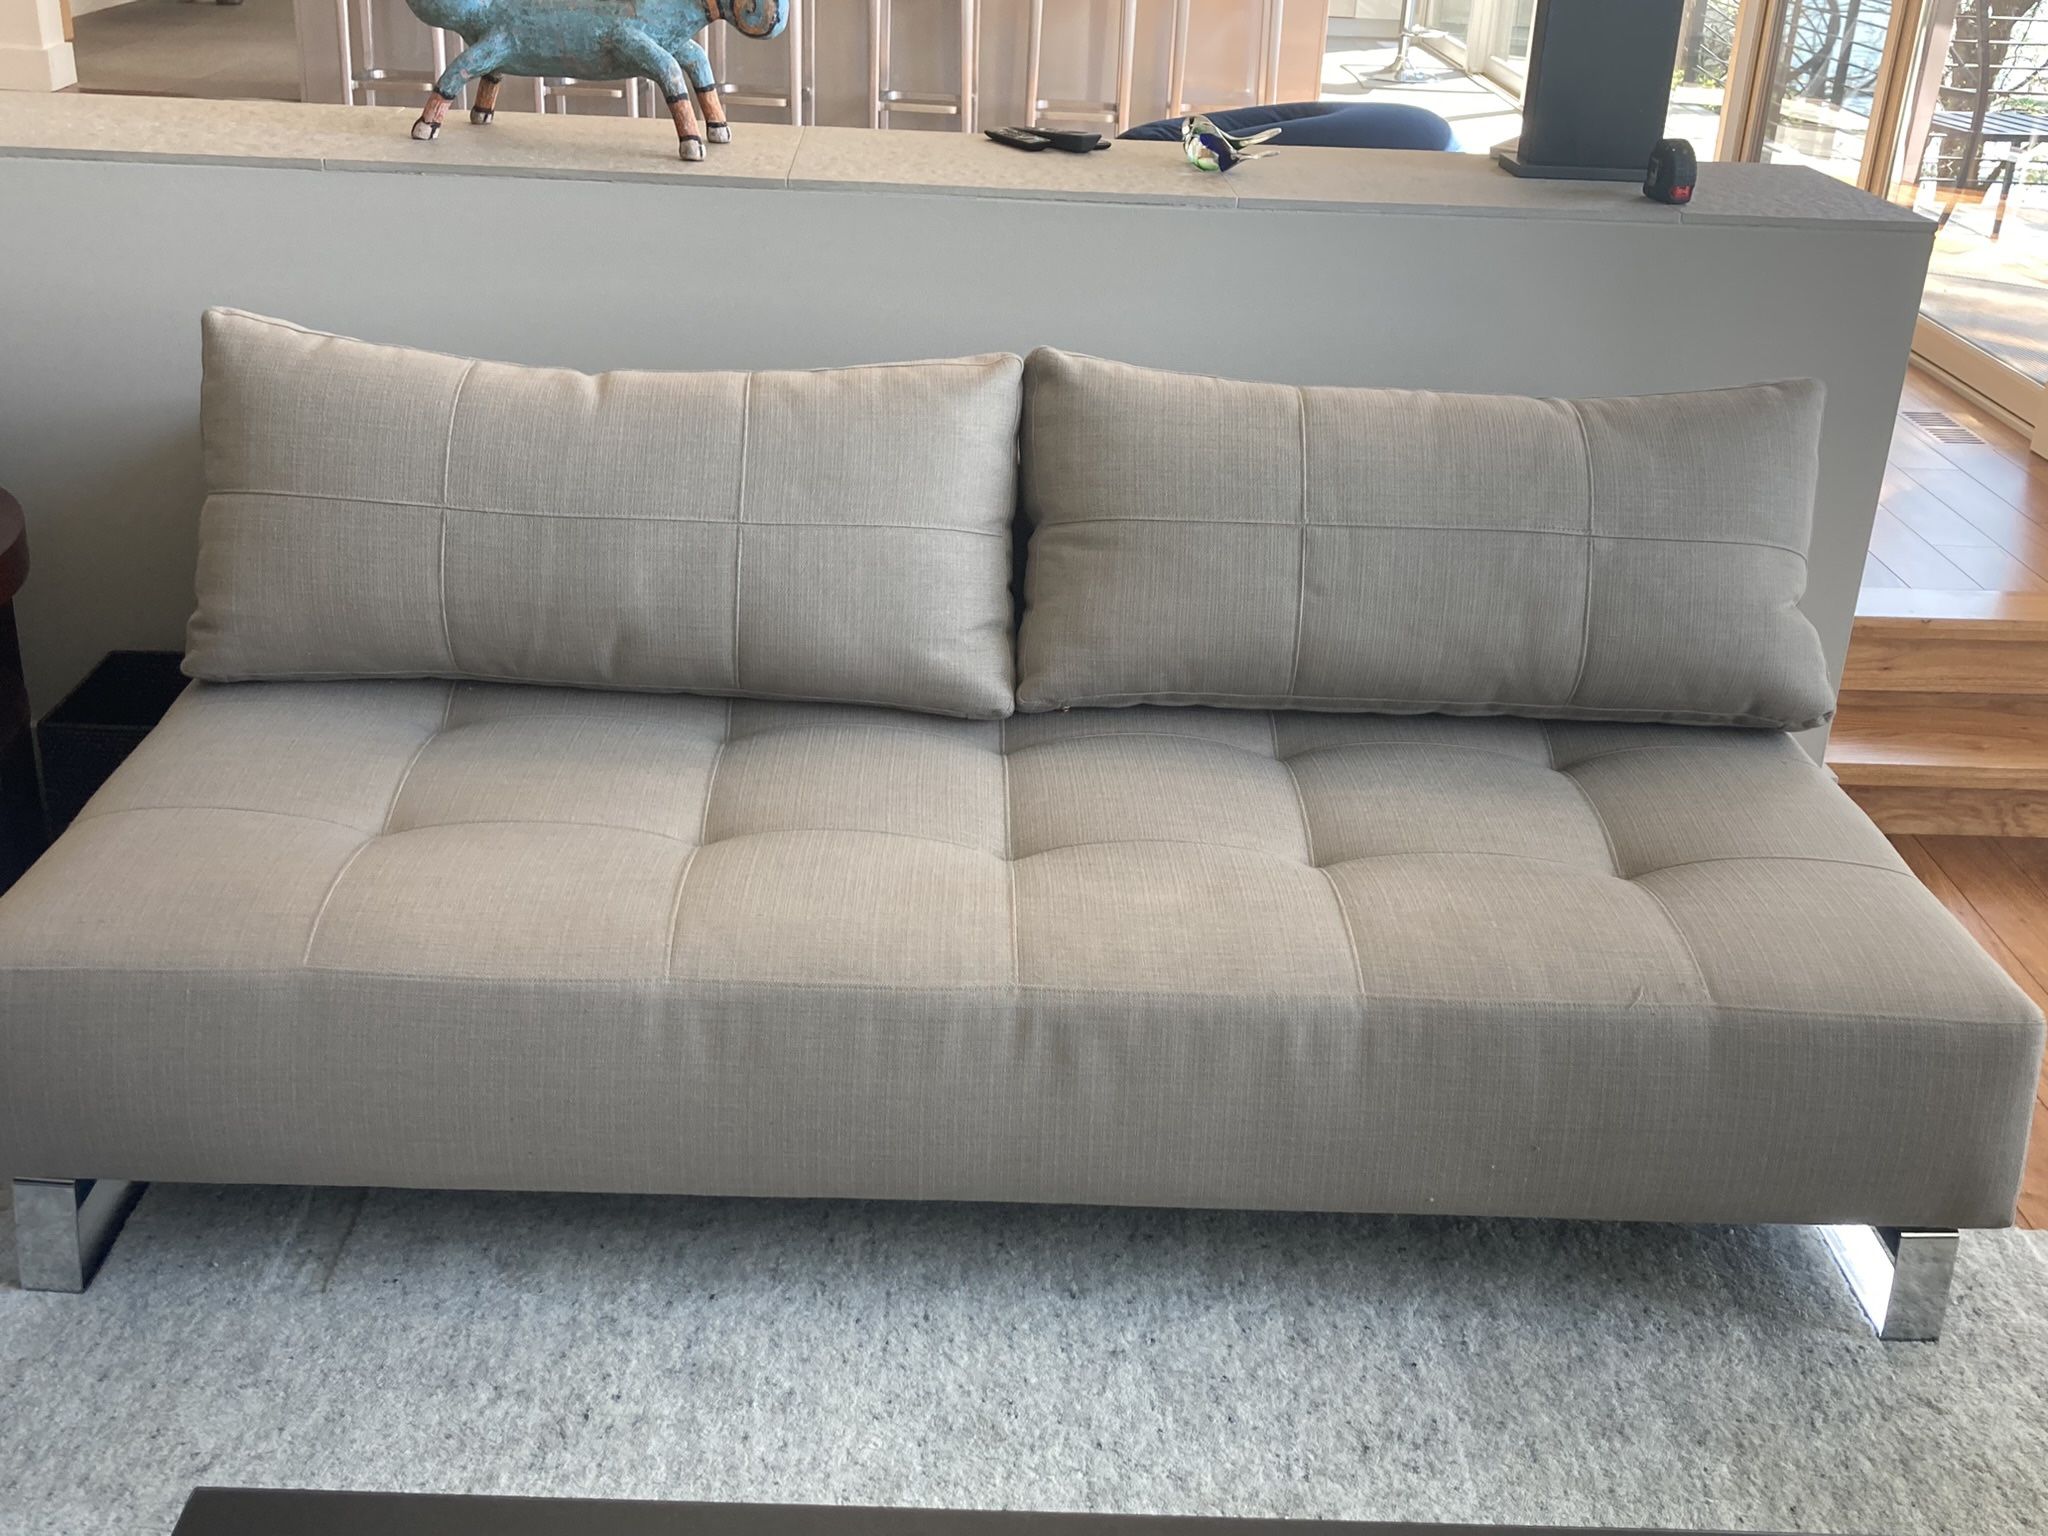 Sofa - By Innovation Living $600